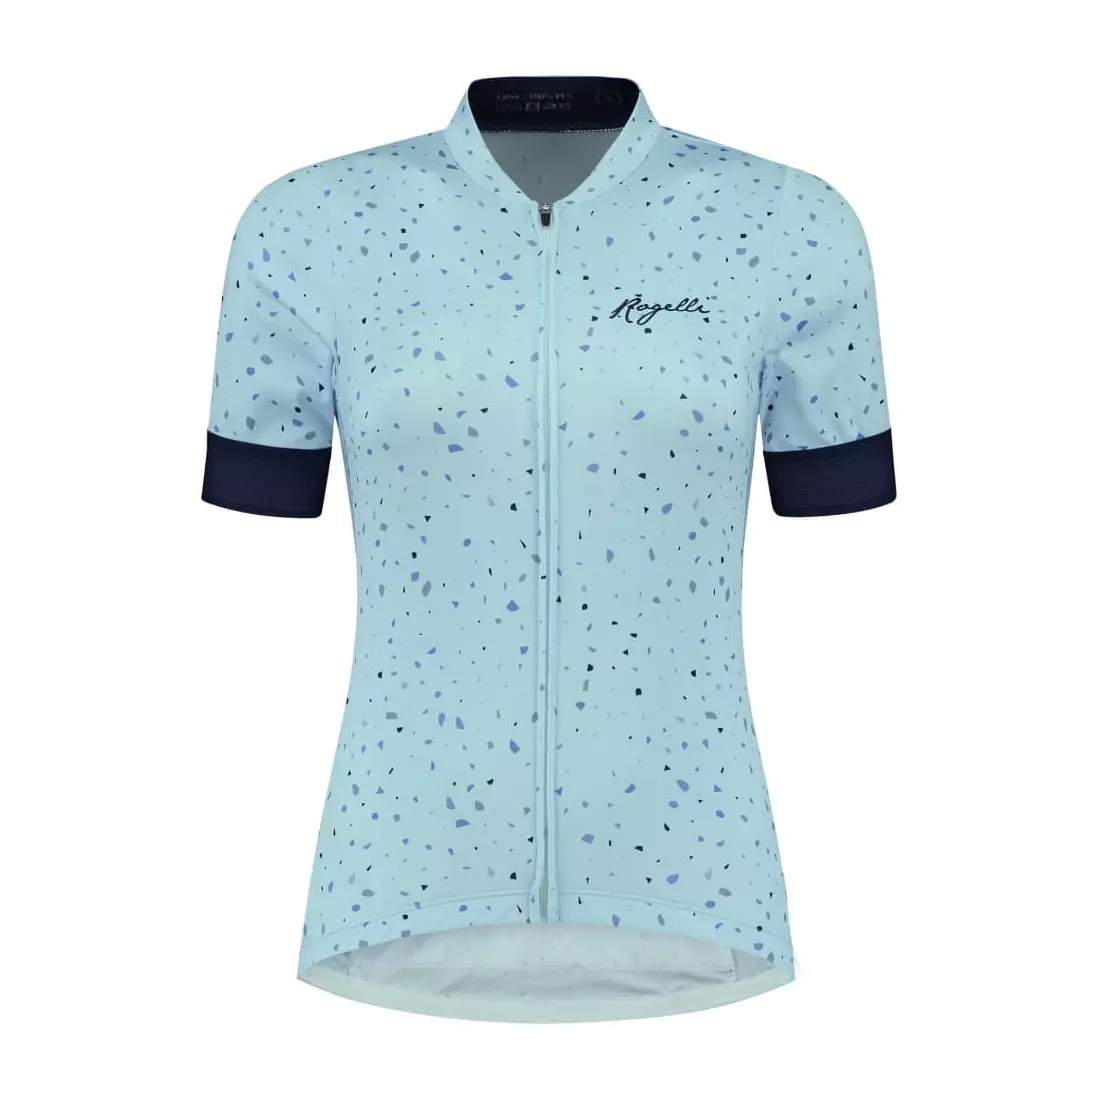 Rogelli TERRAZZO women's cycling jersey, blue